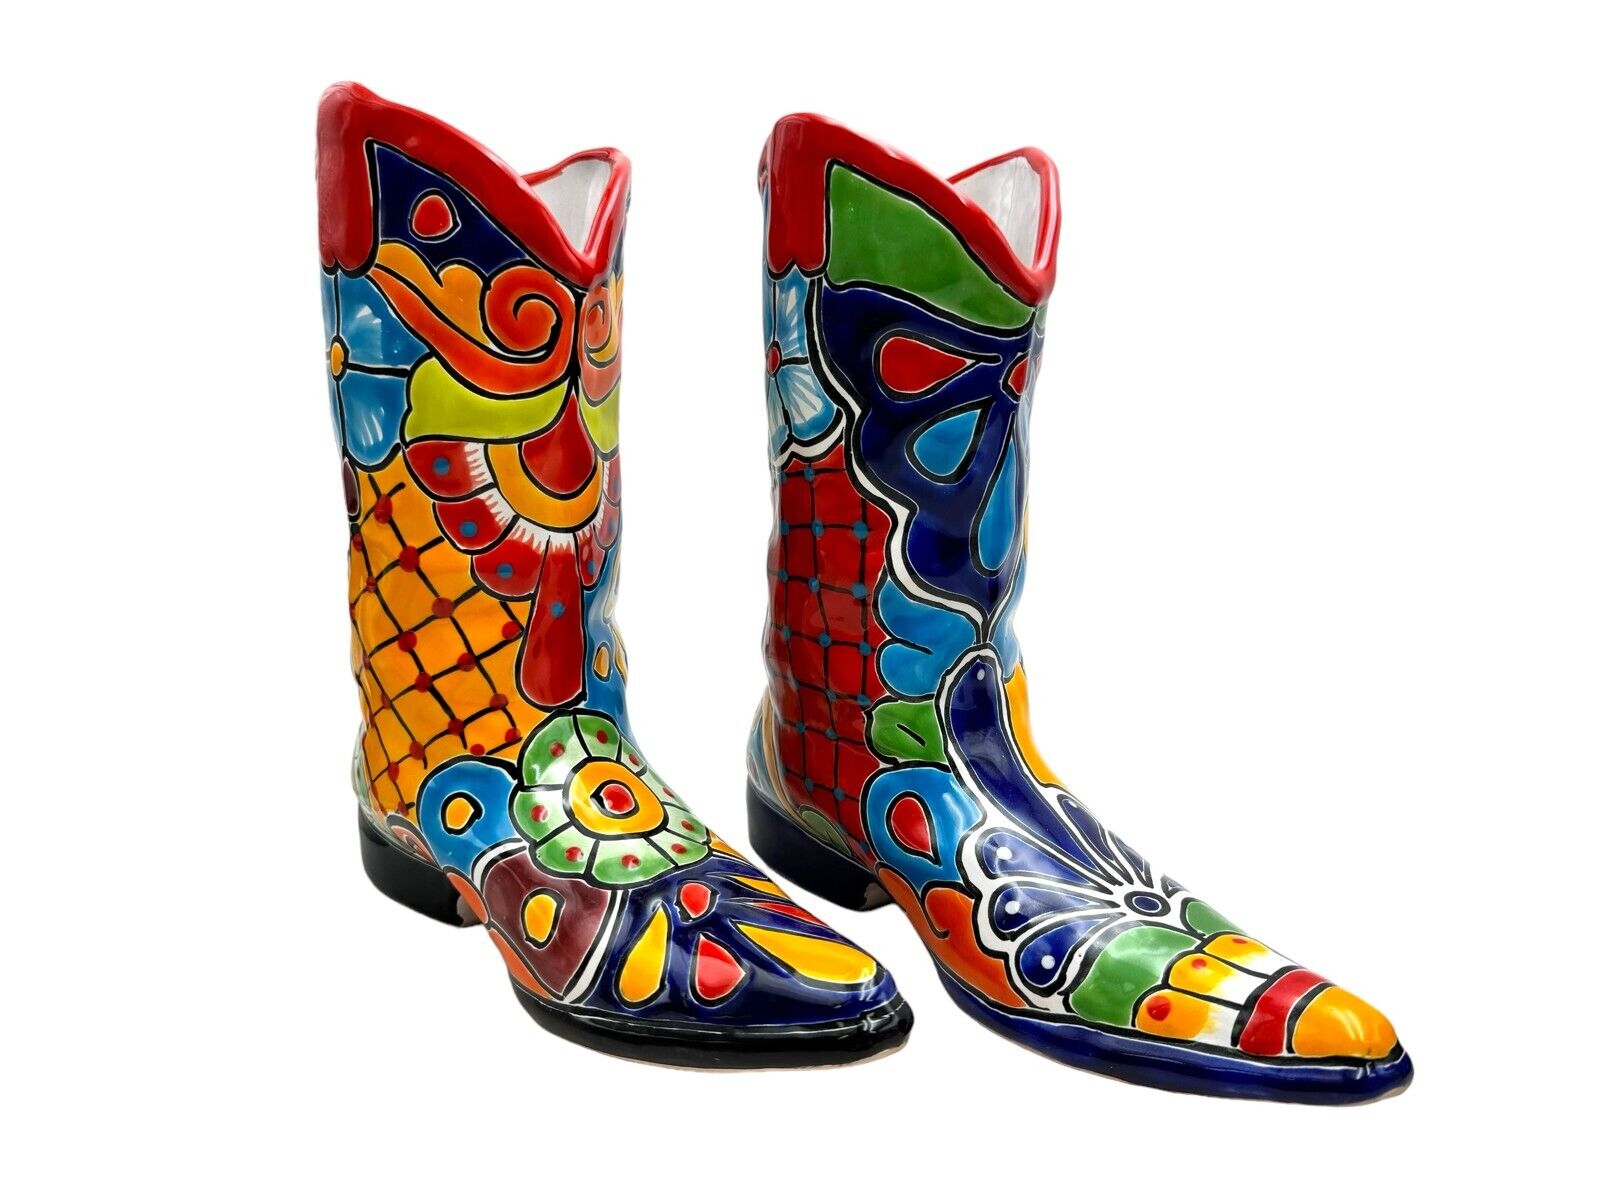 Talavera Cowboy Boot Planter Pot Home Decor Folk Art Mexican Pottery Height 12